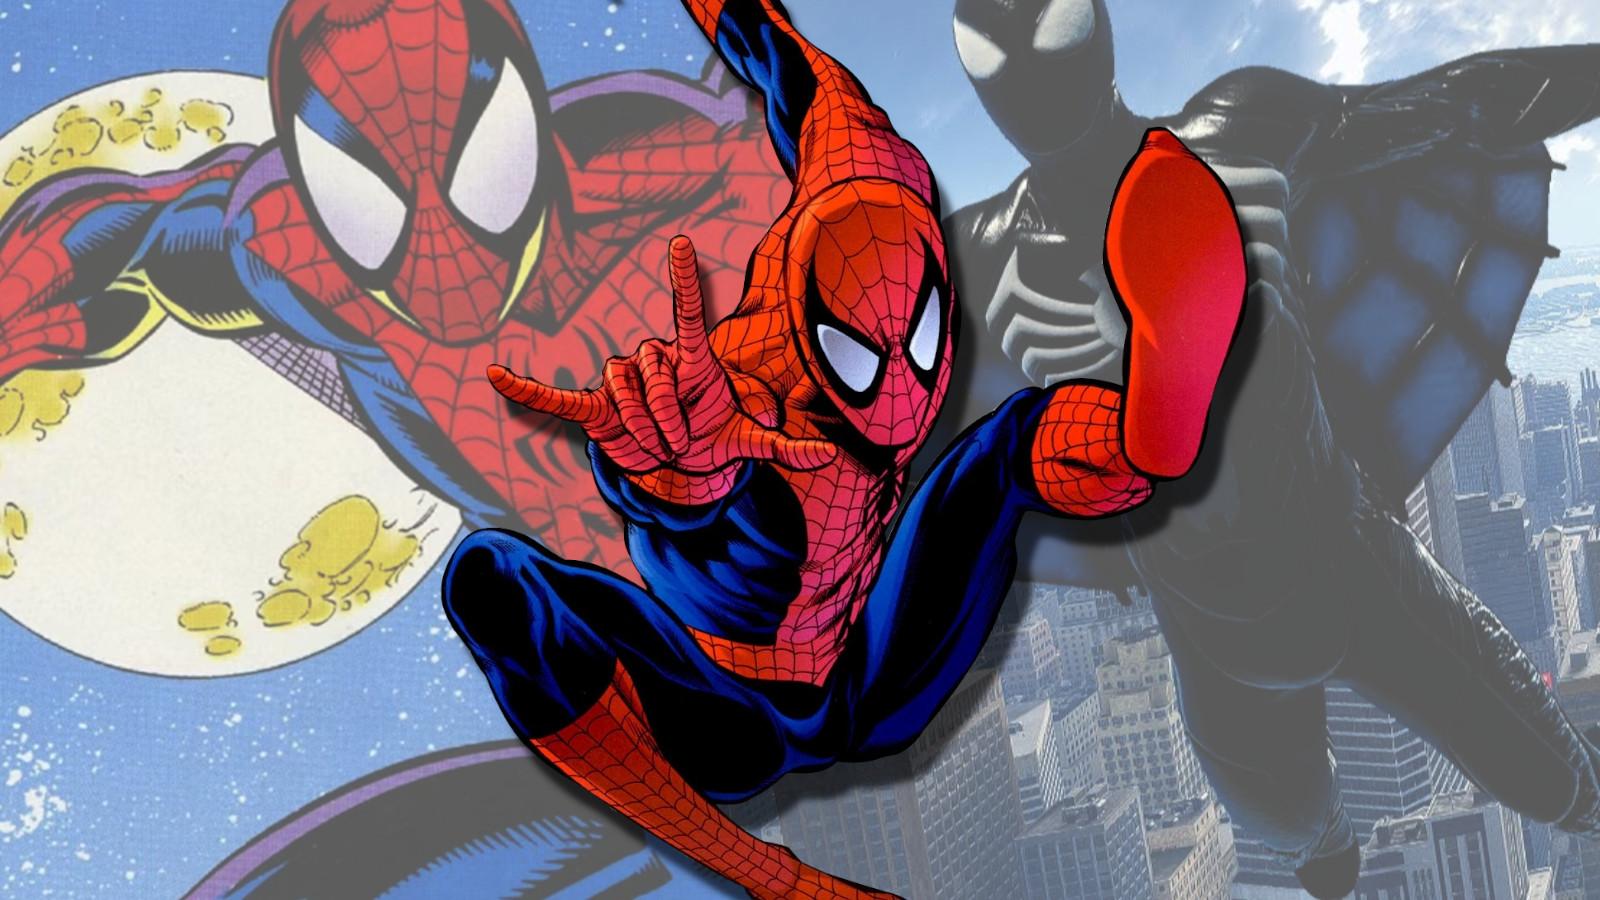 Spider-Man Advanced Suit Explained